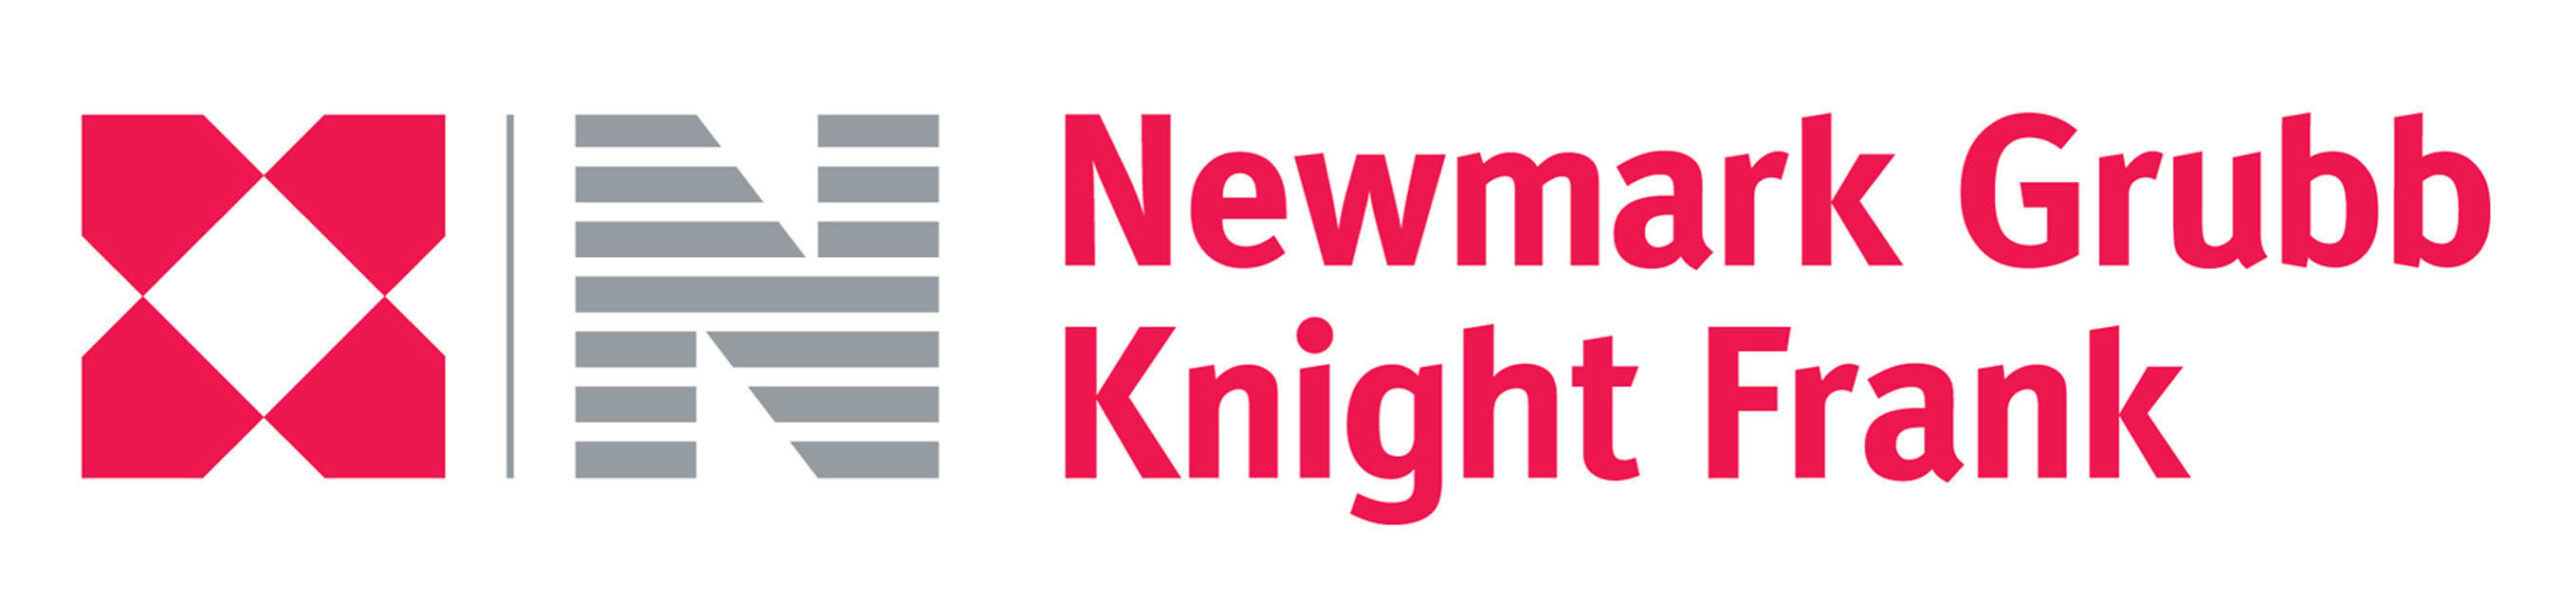 Newmark Grubb Knight Frank logo.  (PRNewsFoto/Newmark Grubb Knight Frank)